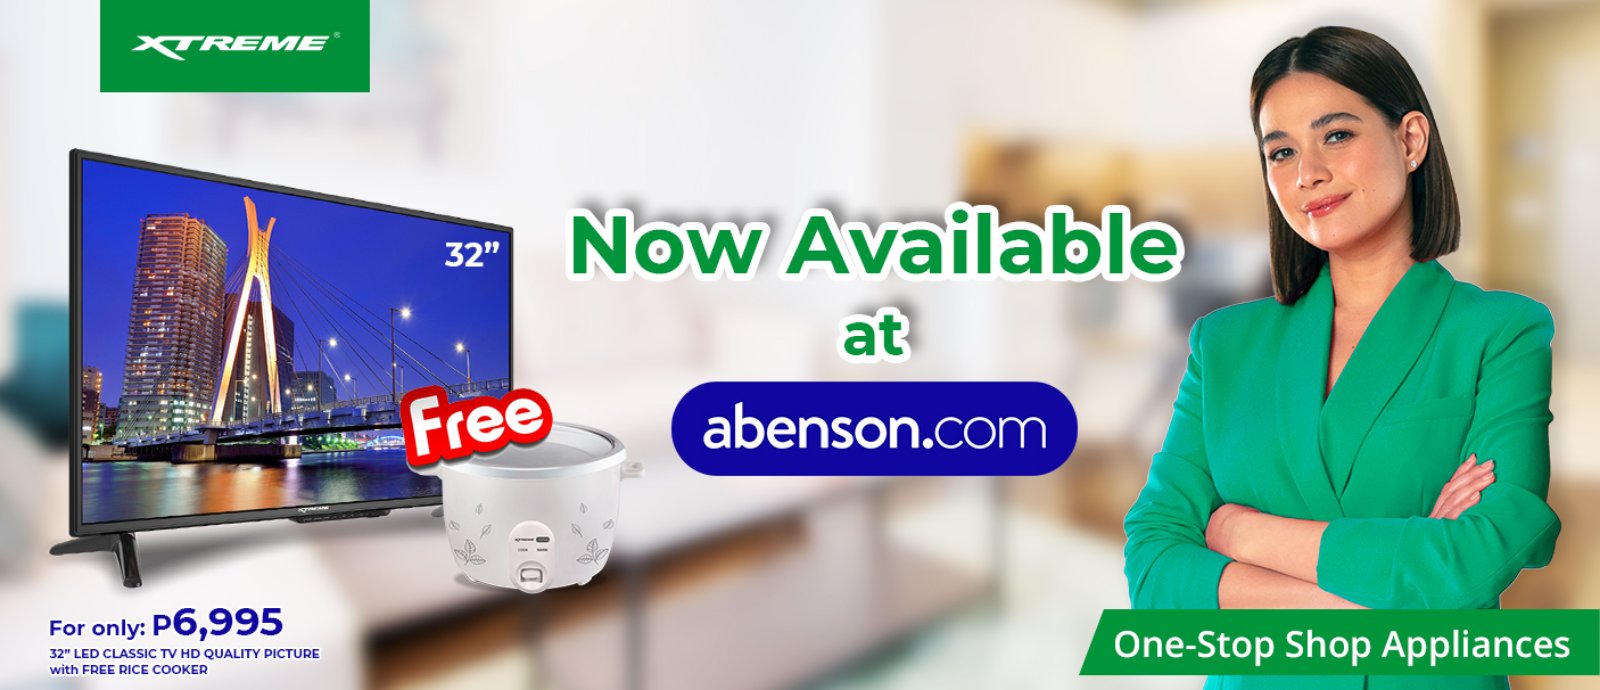 XTREME Appliances now available on ABENSON E-Commerce platform starting July 29